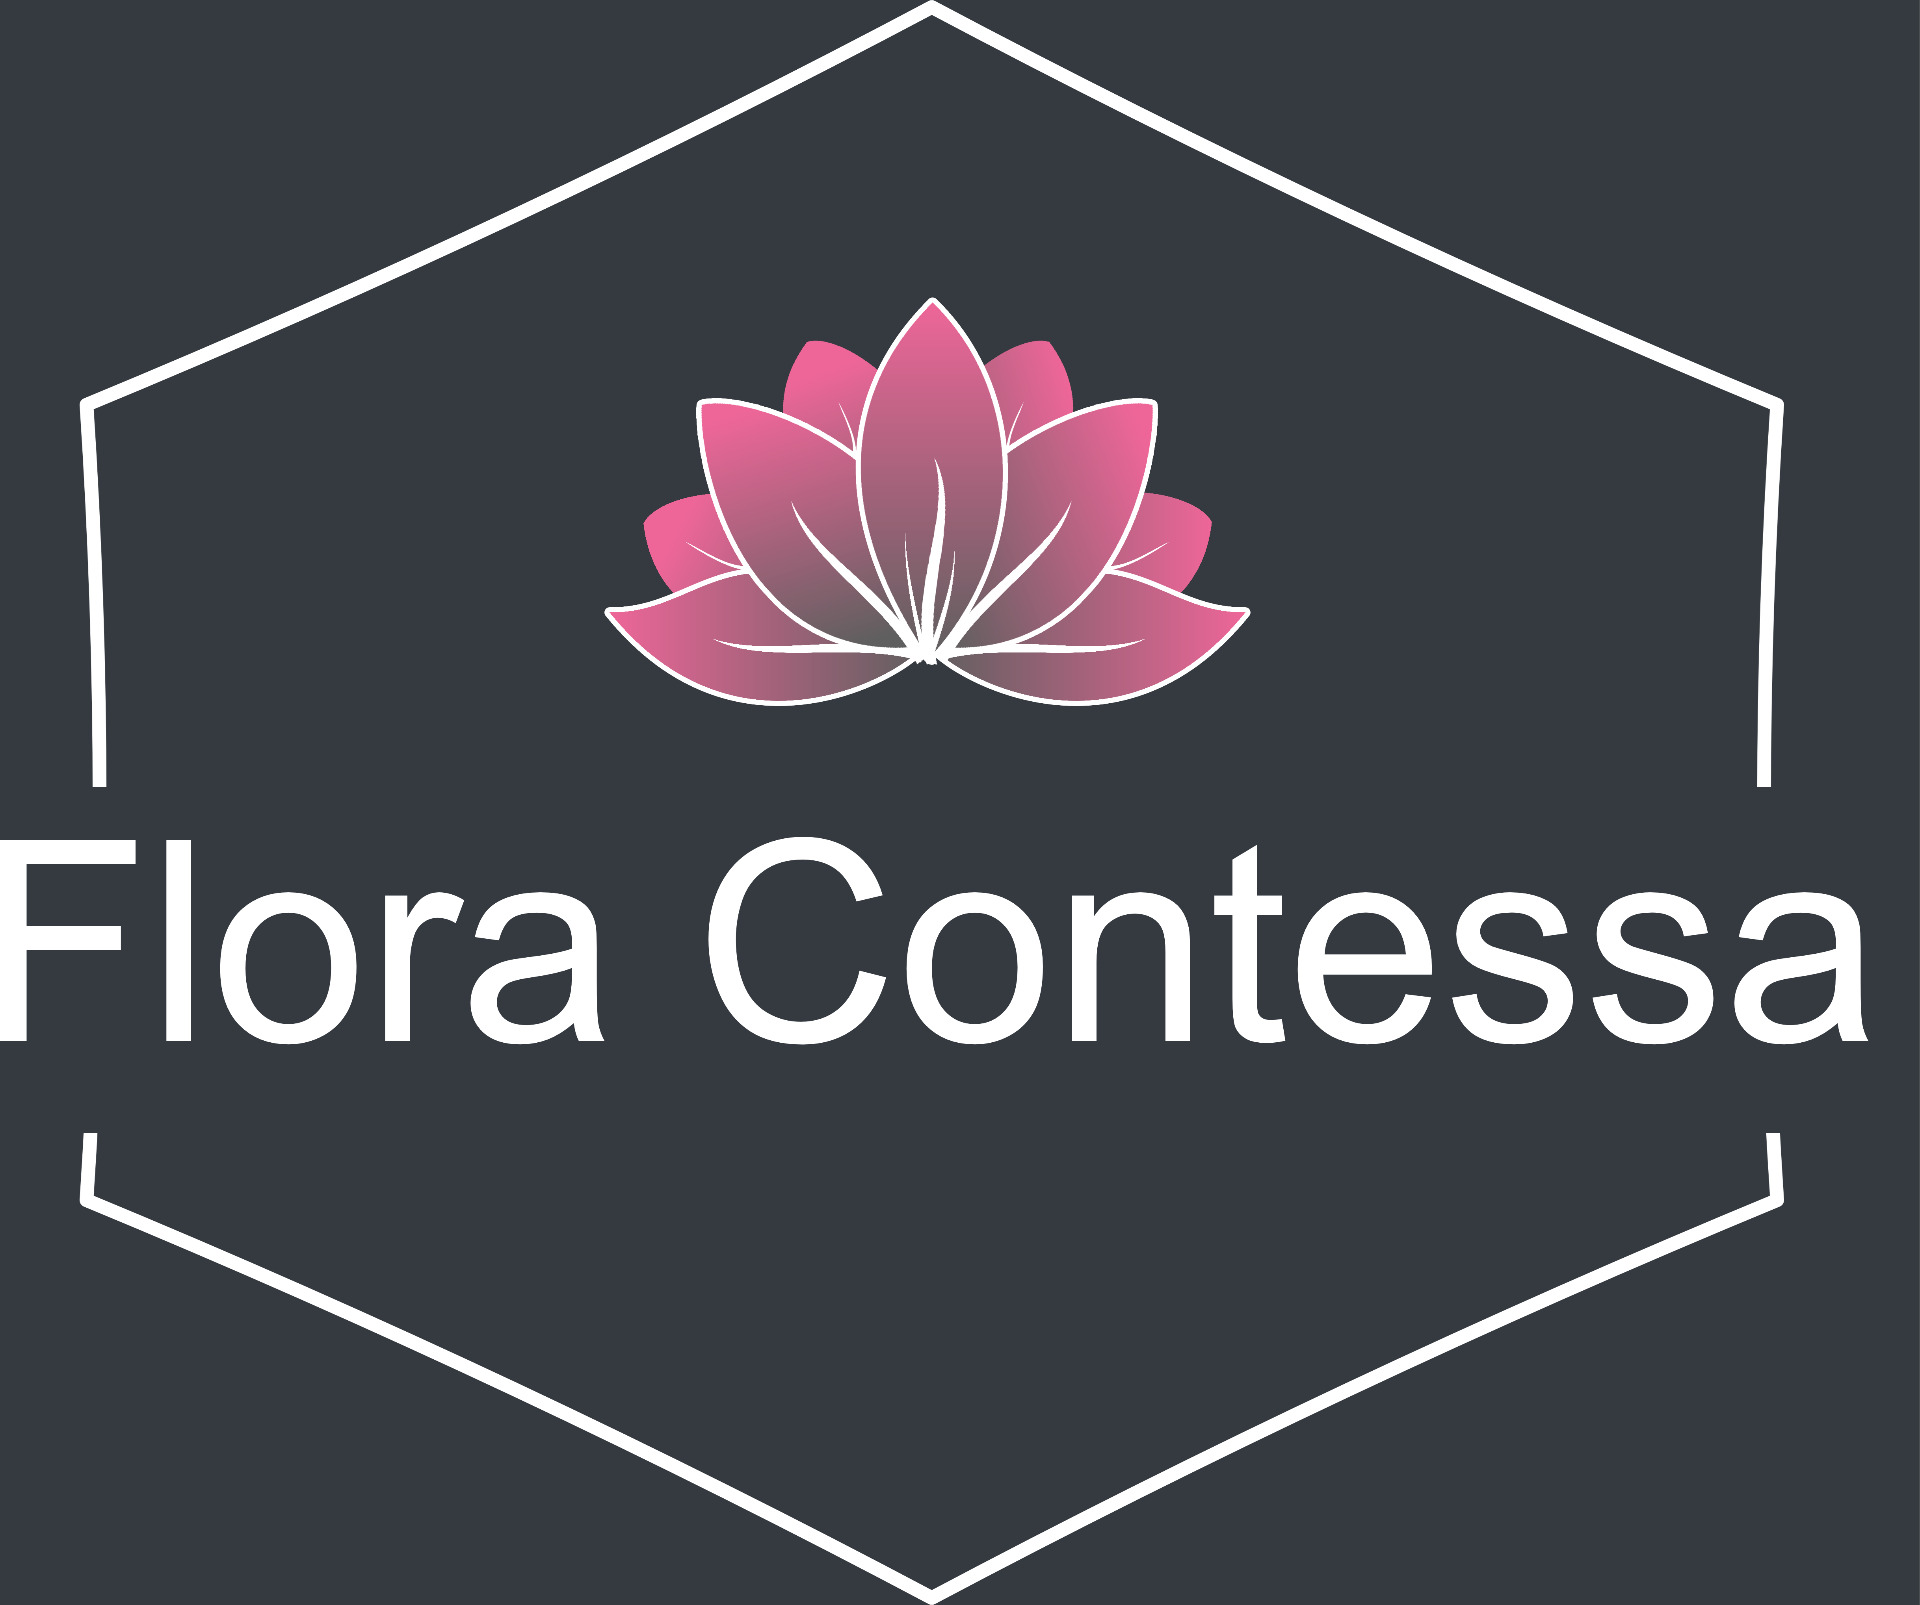 Flora Contessa